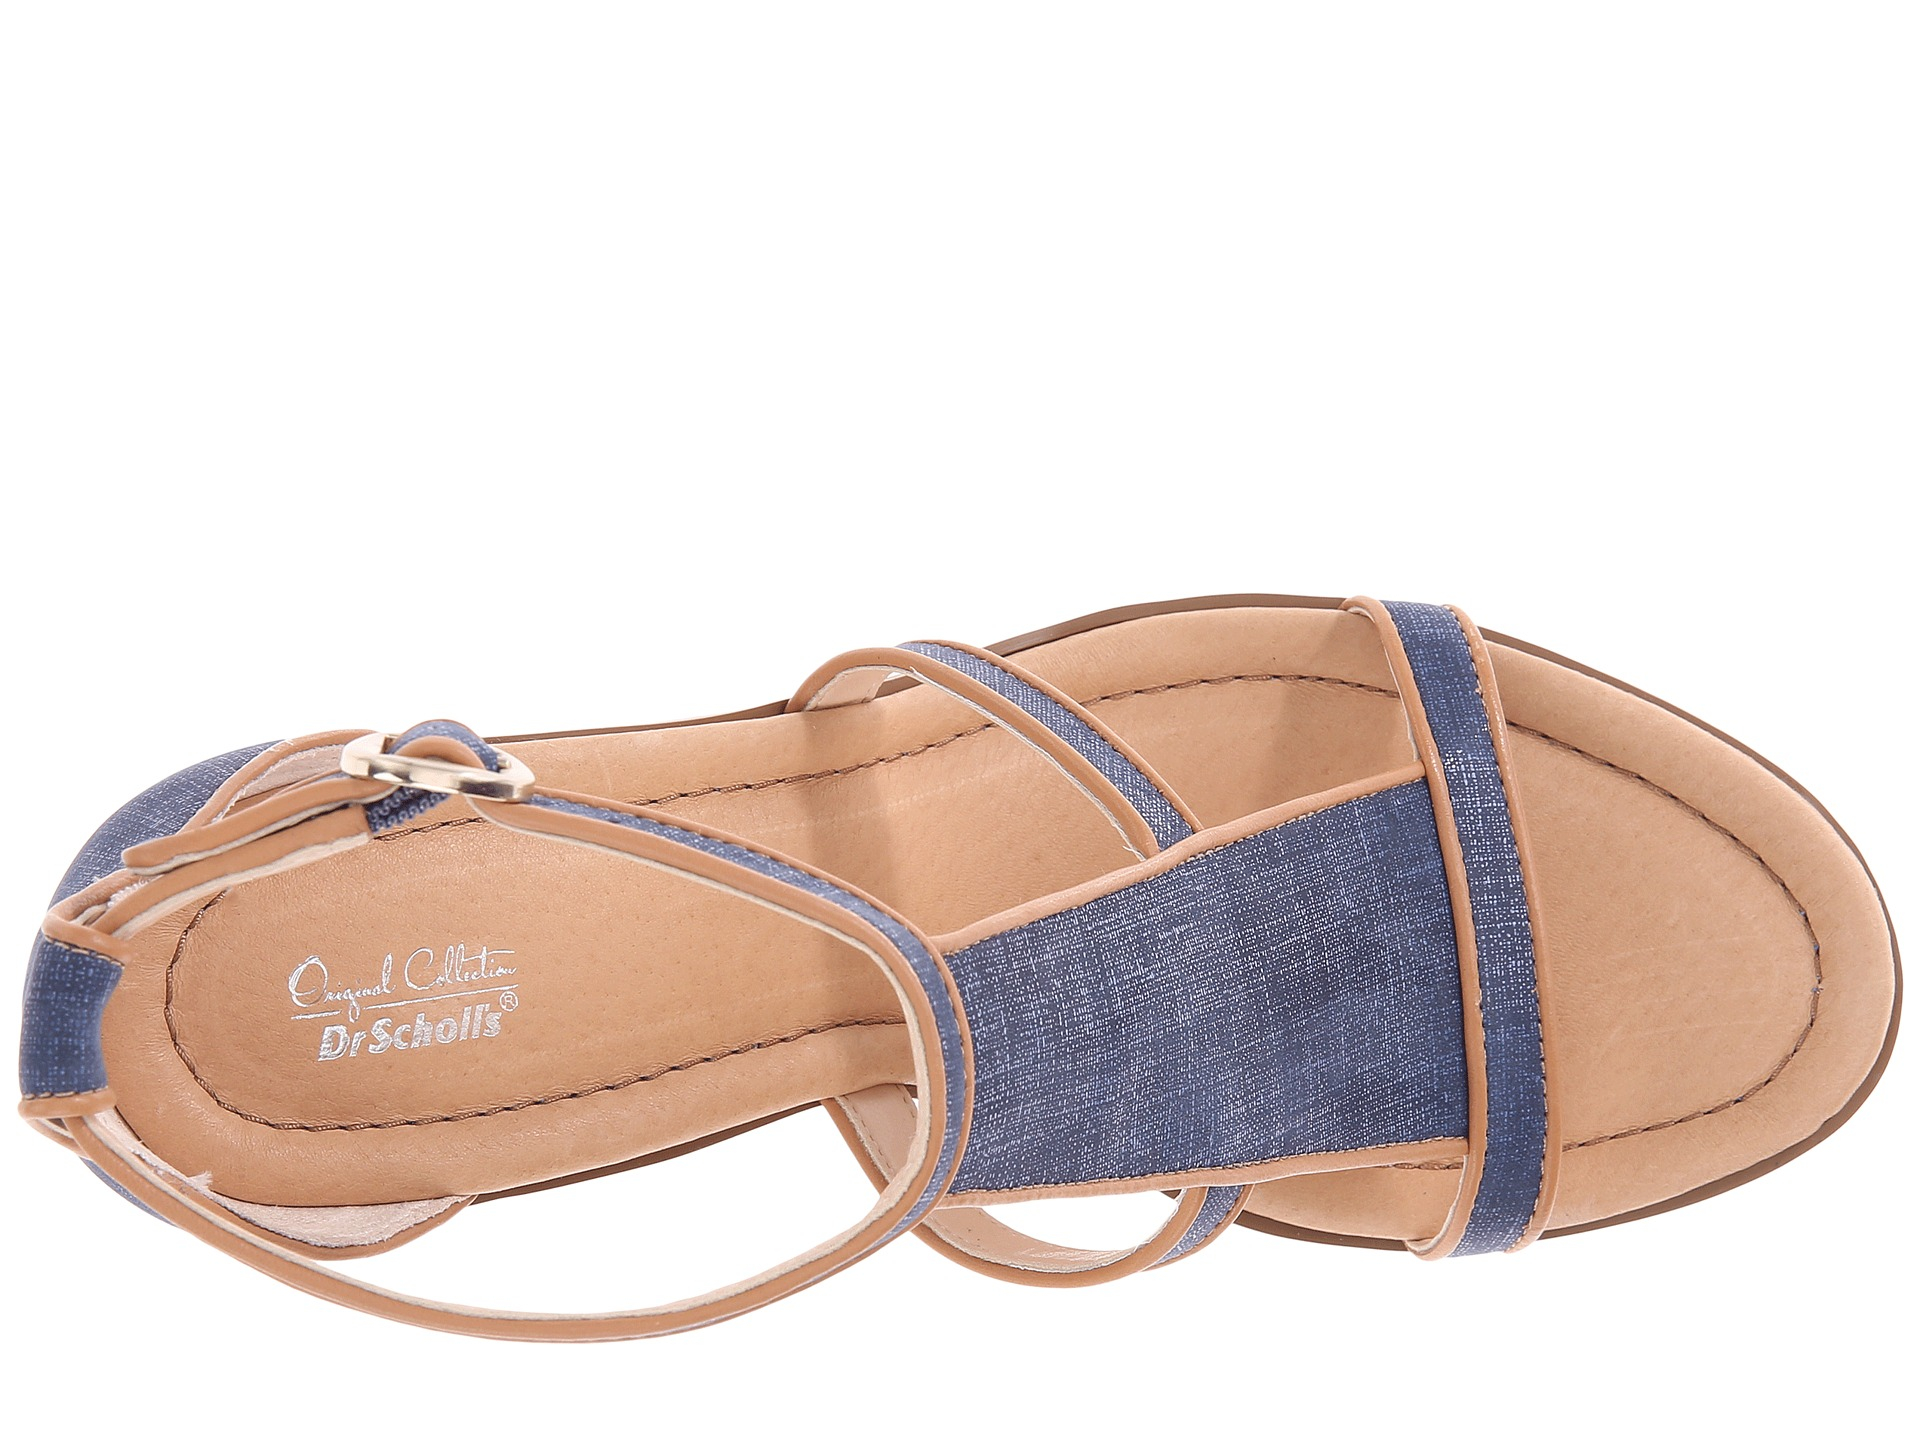 Dr. Scholls Original Collection Denim Jacobs Wedge Sandals in Blue - Lyst